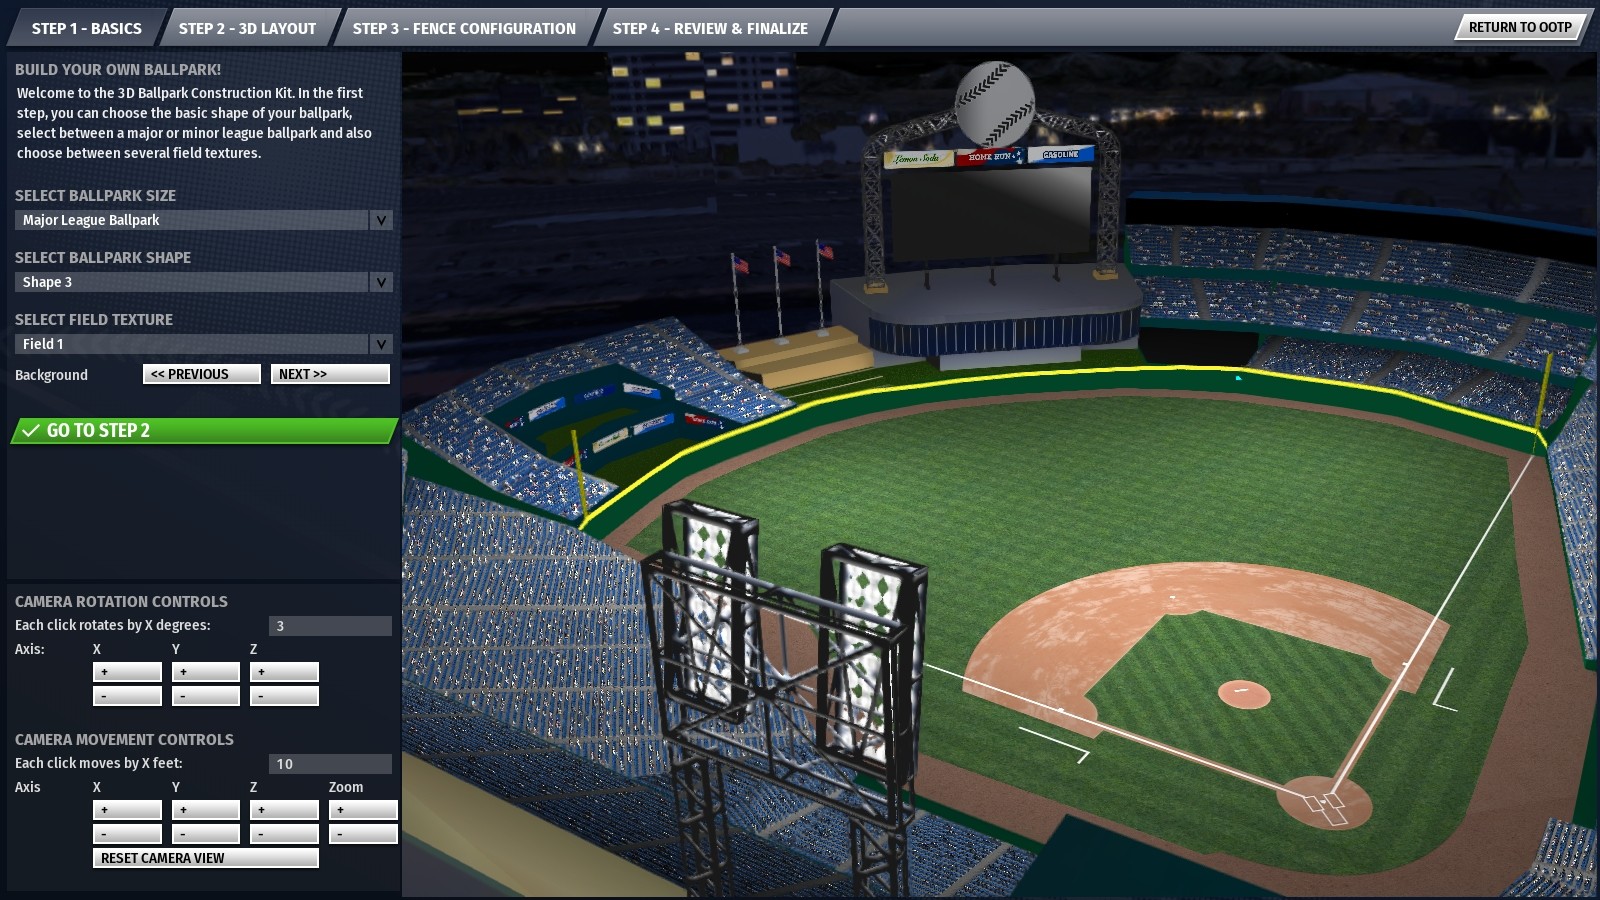 ootp baseball 19 free download mac torrent